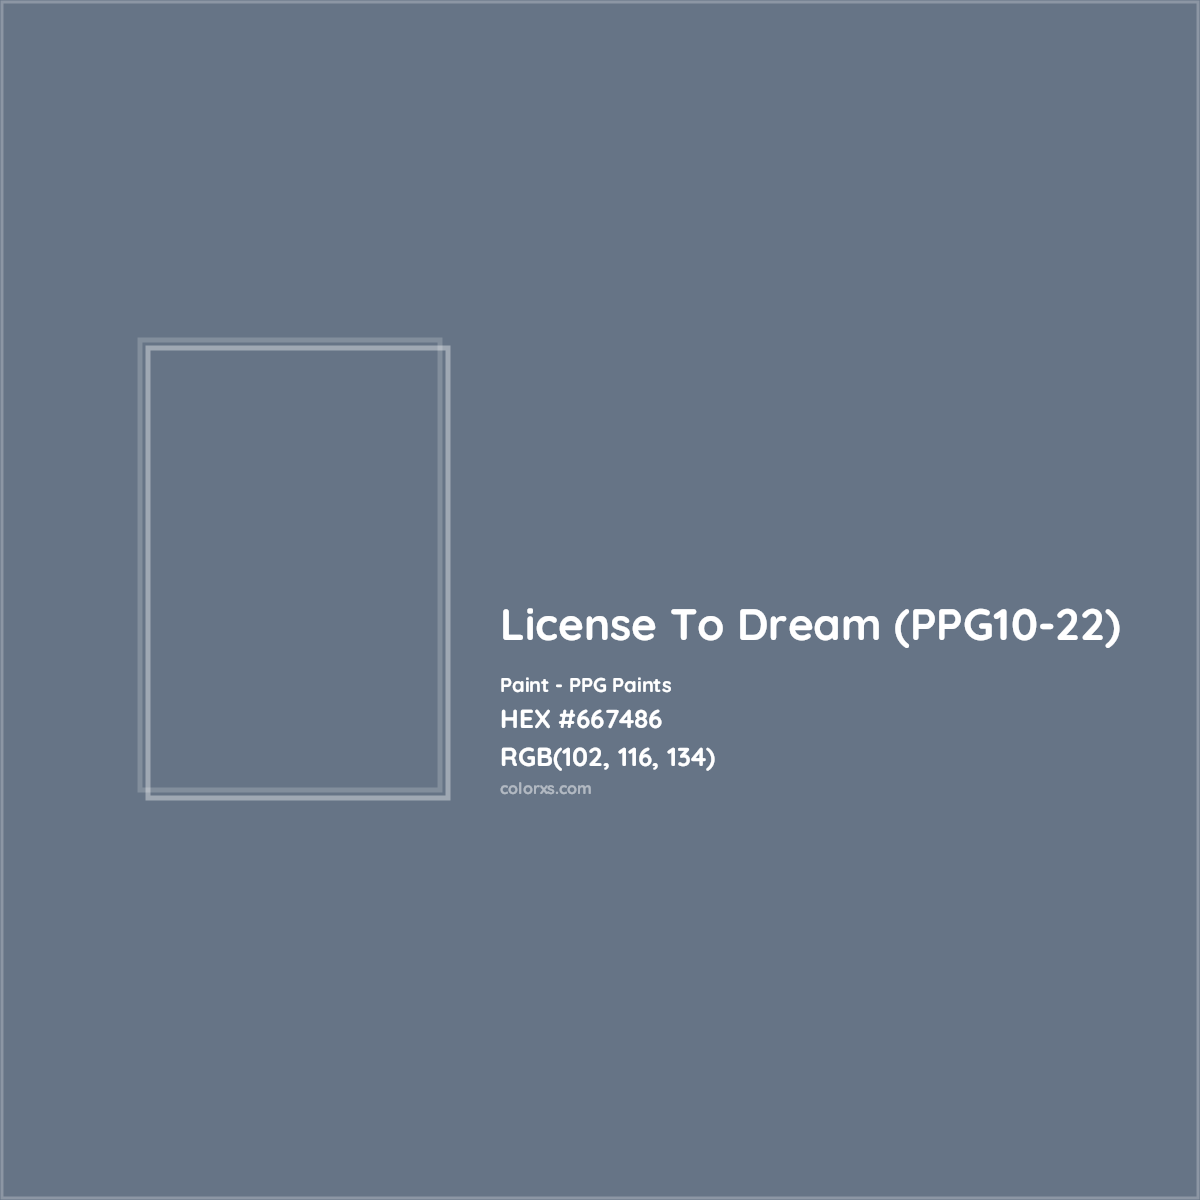 HEX #667486 License To Dream (PPG10-22) Paint PPG Paints - Color Code